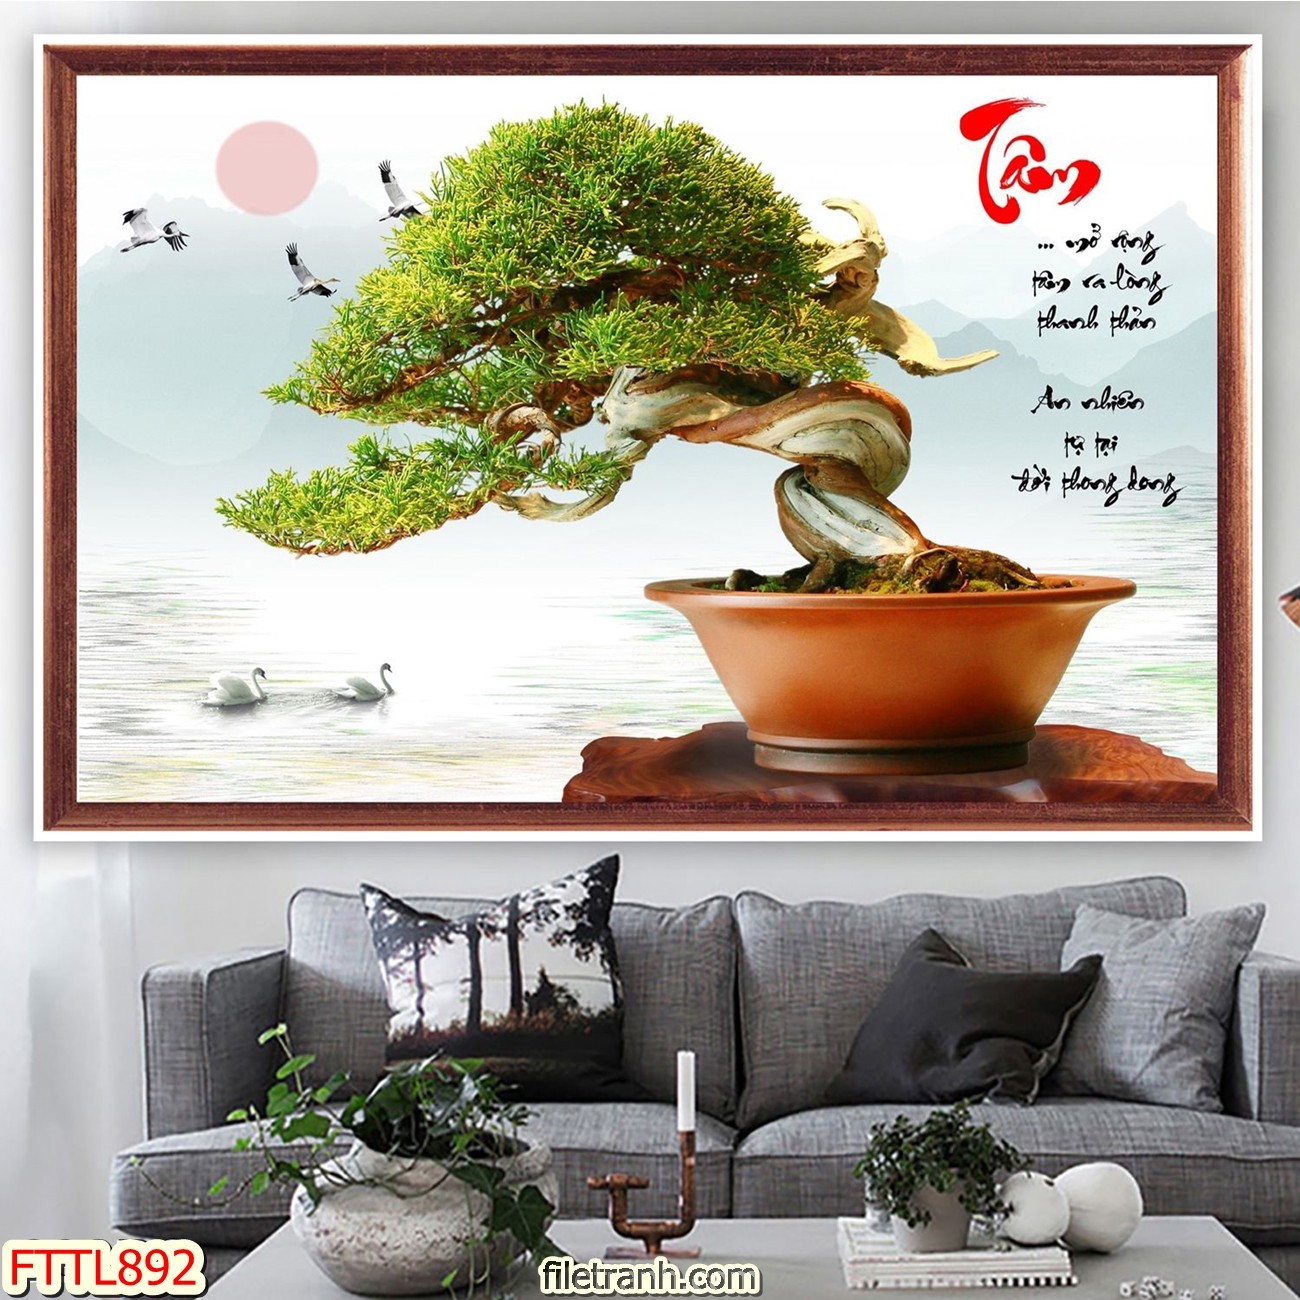 http://filetranh.com/file-tranh-chau-mai-bonsai/file-tranh-chau-mai-bonsai-fttl892.html